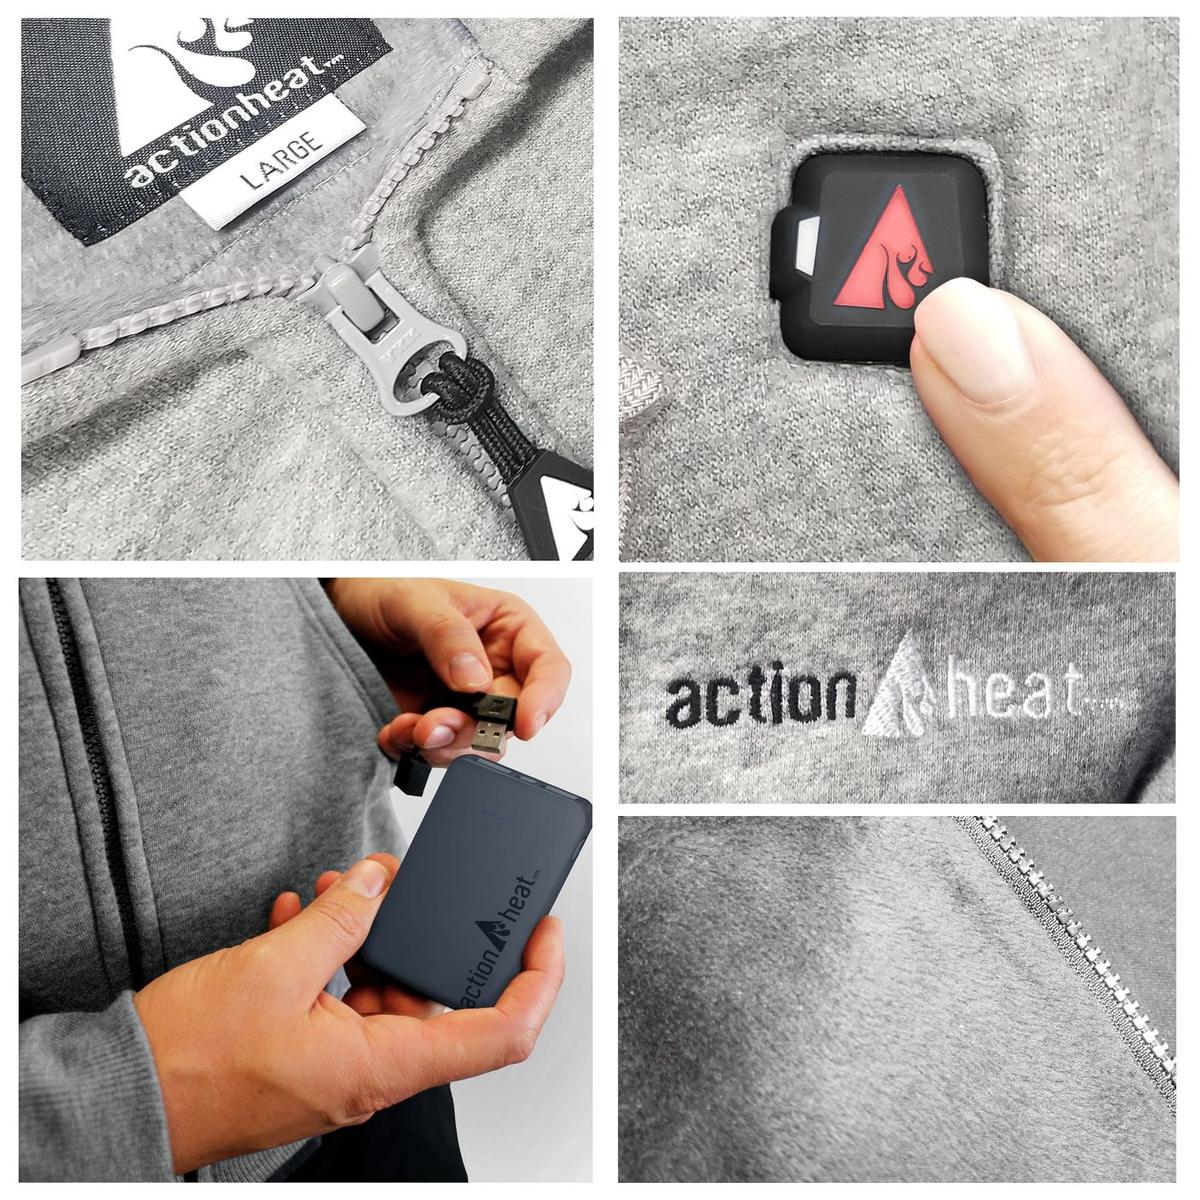 ActionHeat 5V Battery Heated Hoodie Sweatshirt - Battery